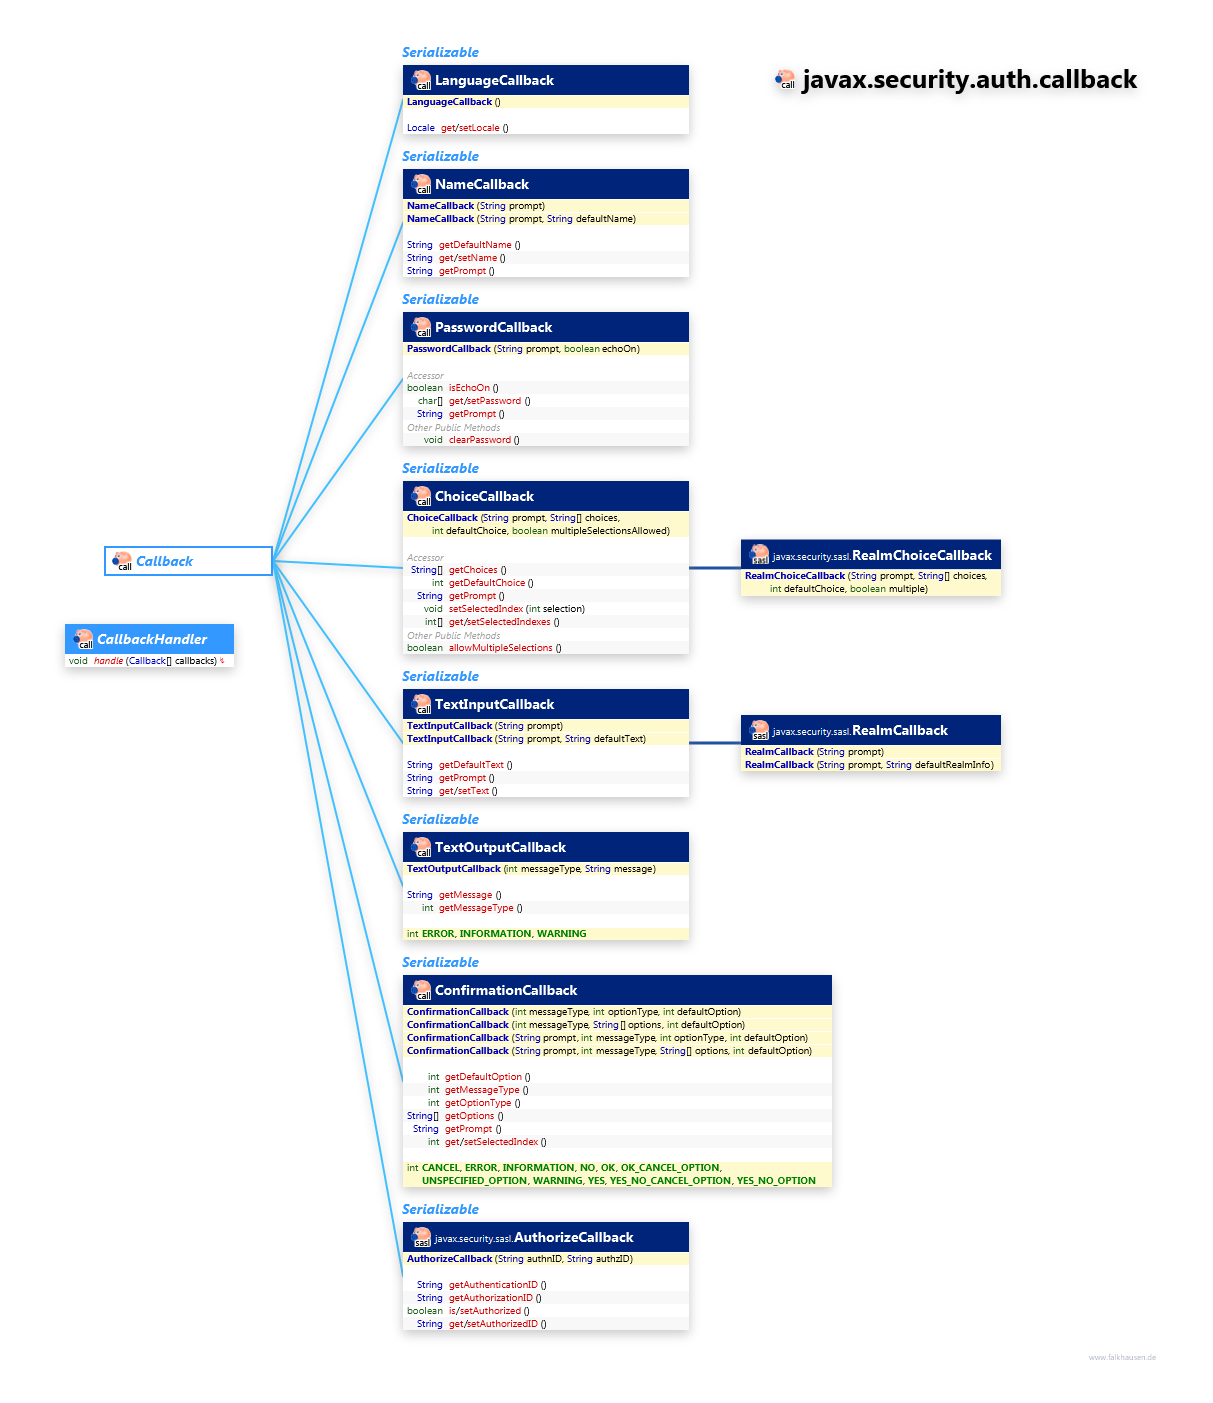 javax.security.auth.callback class diagram and api documentation for Java 7